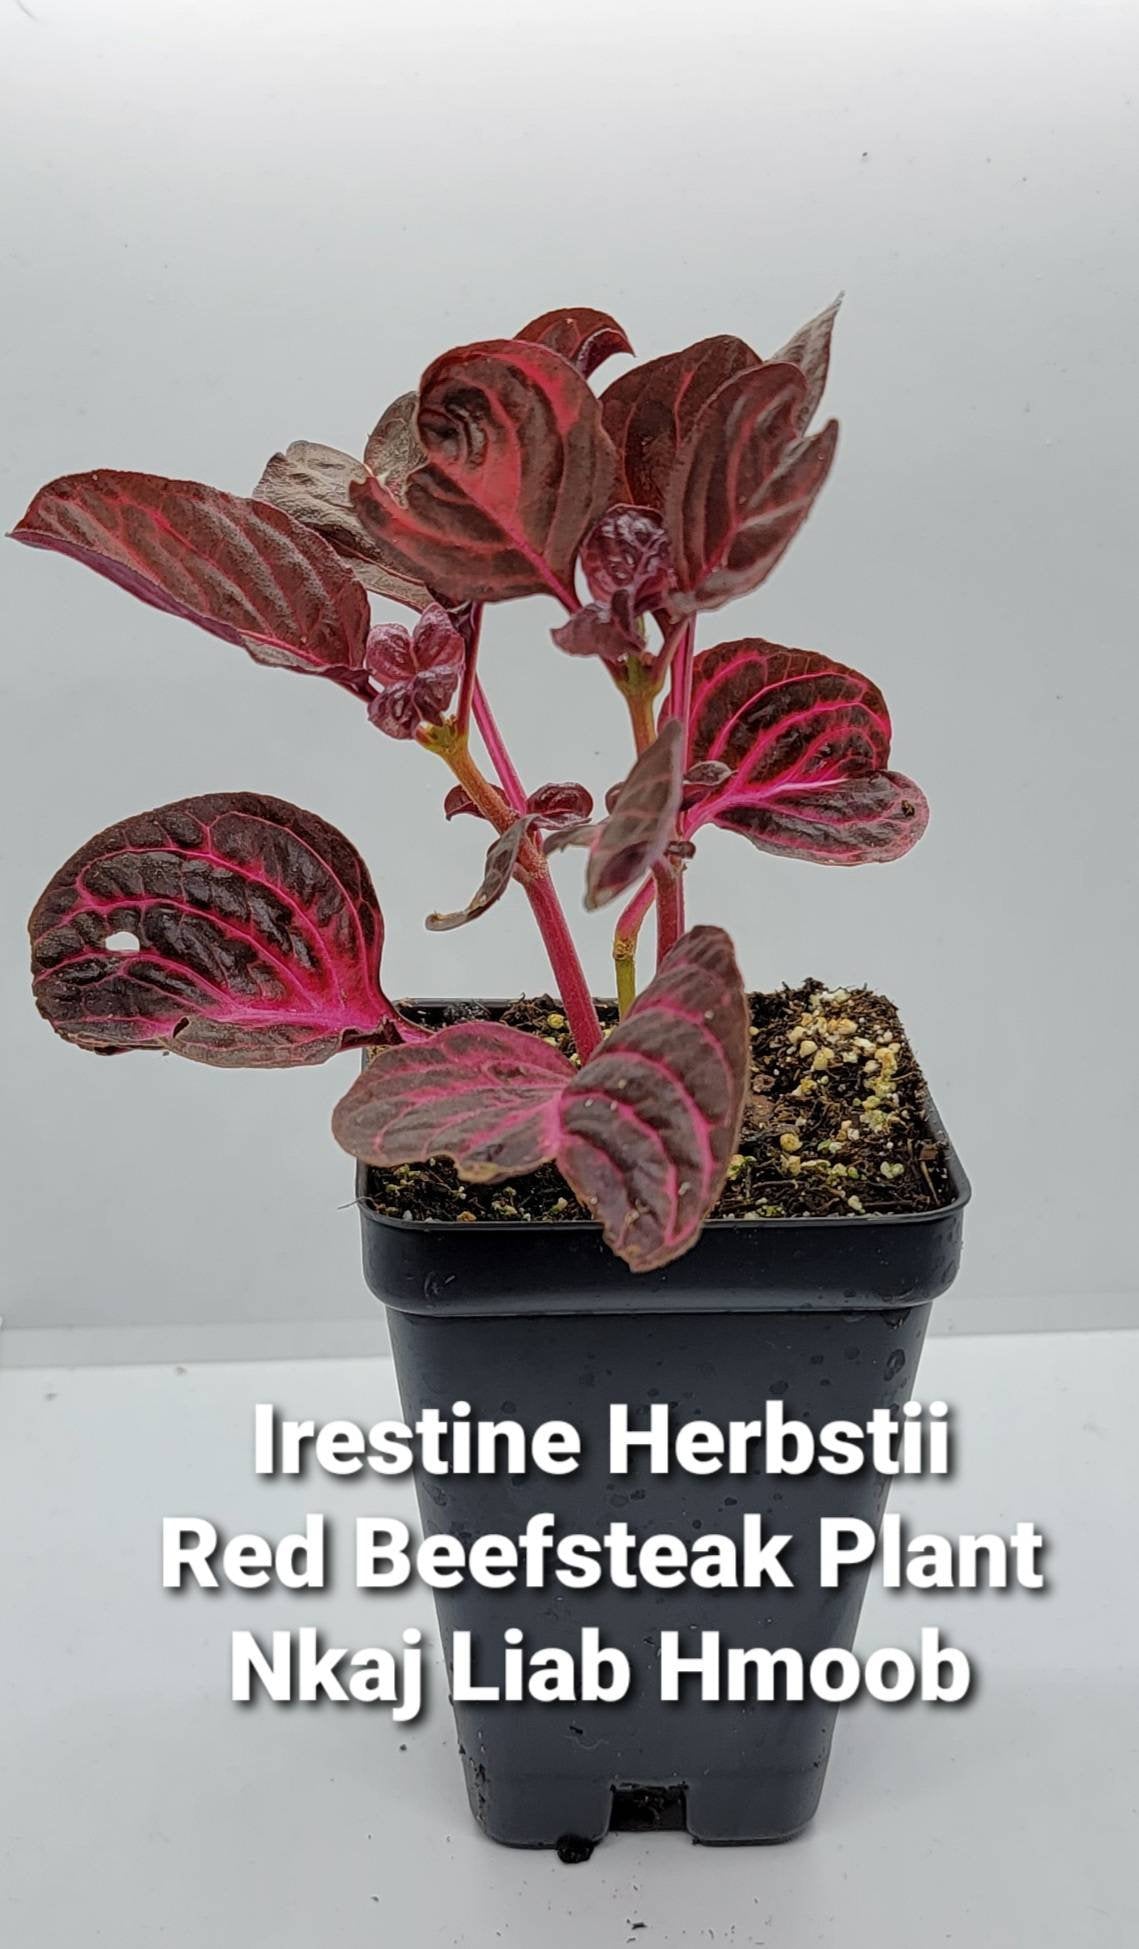 Iresine Herbstii, Red Beefsteak - Nkaj Liab Hmoob Hmong Medicinal Herb Starter Plant- 2.5" pot